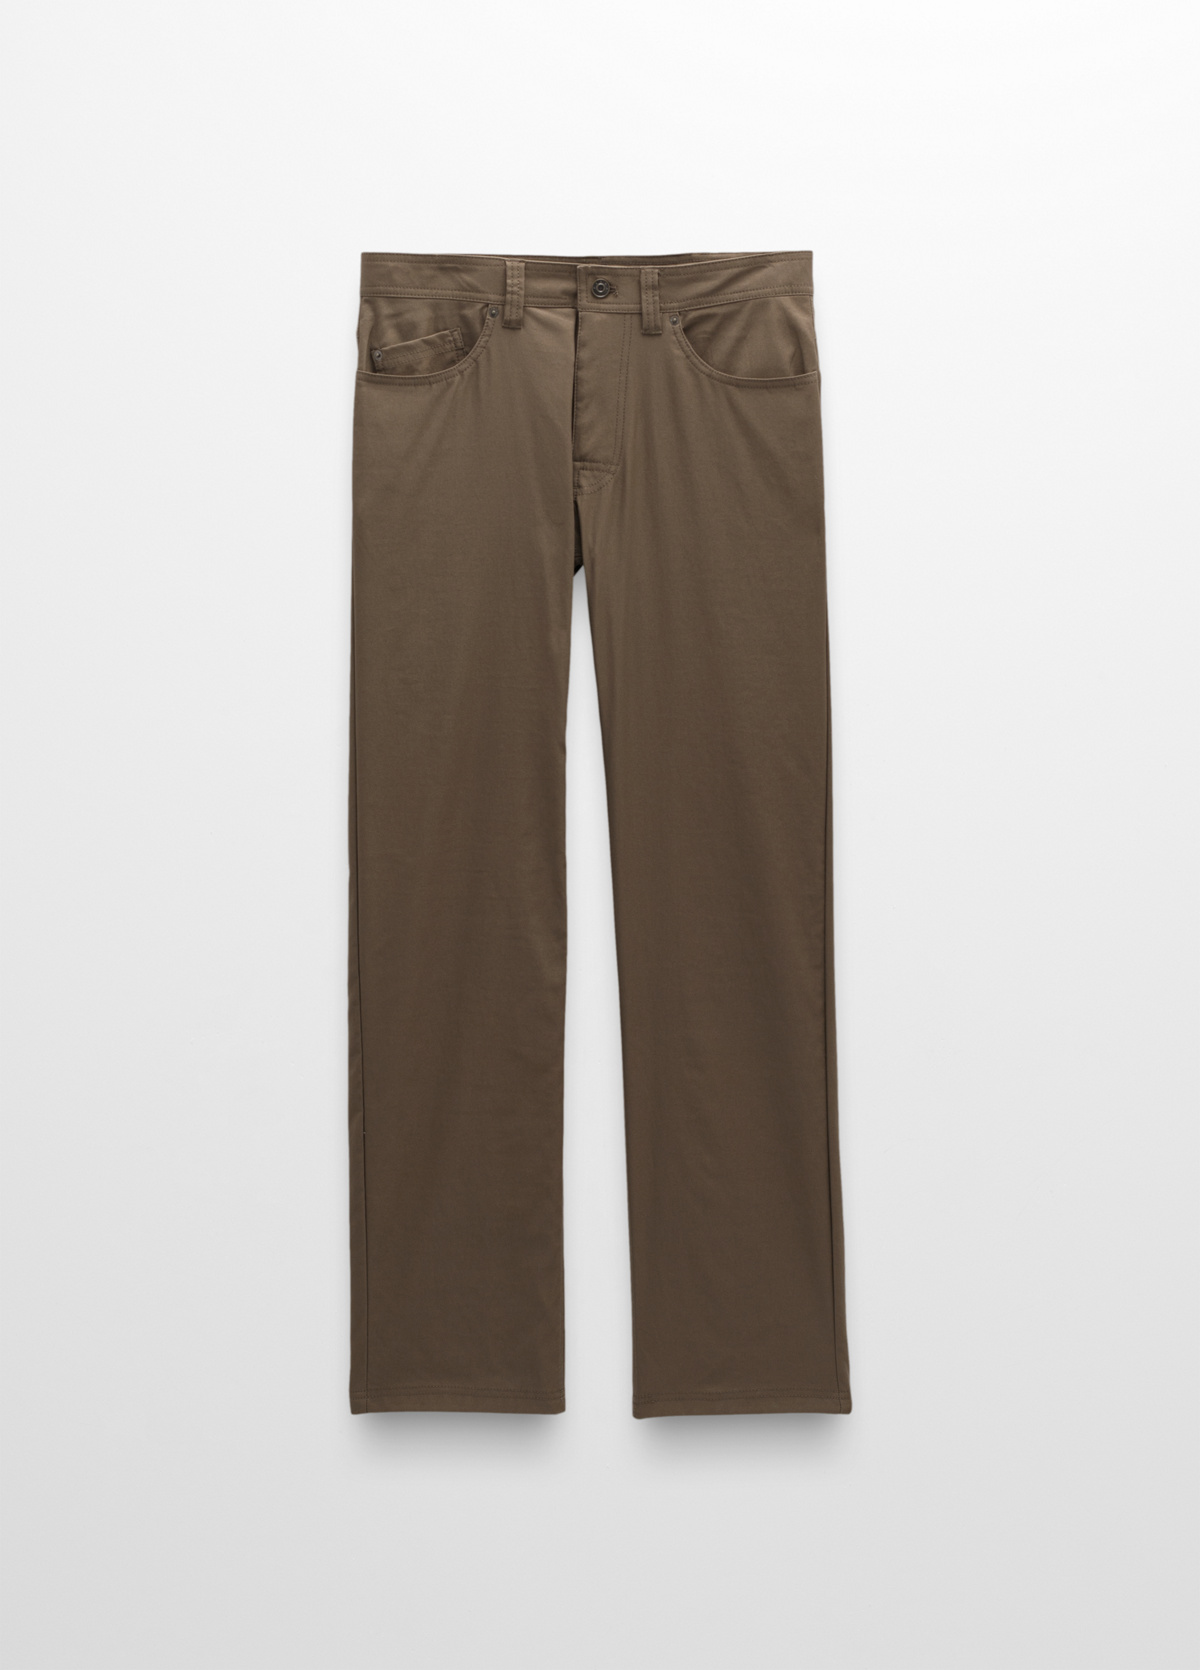 PRANA - High Rock Pant - 1969851 - Arthur James Clothing Company